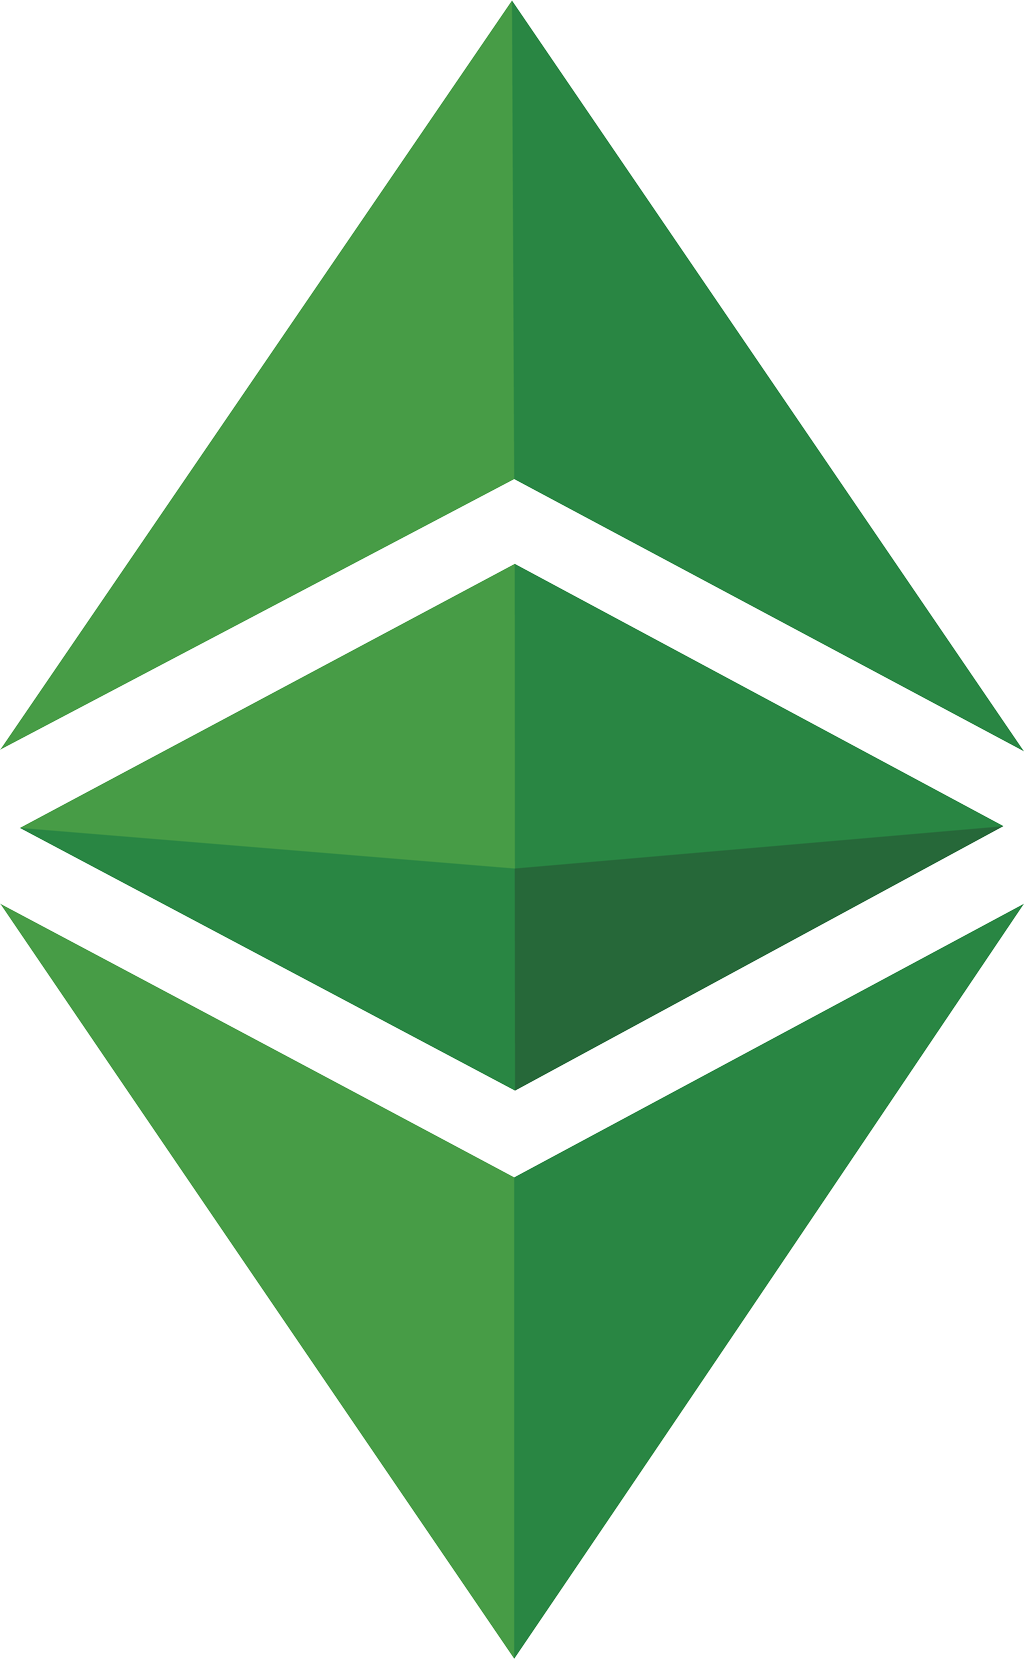 Ethereum coin classic logo